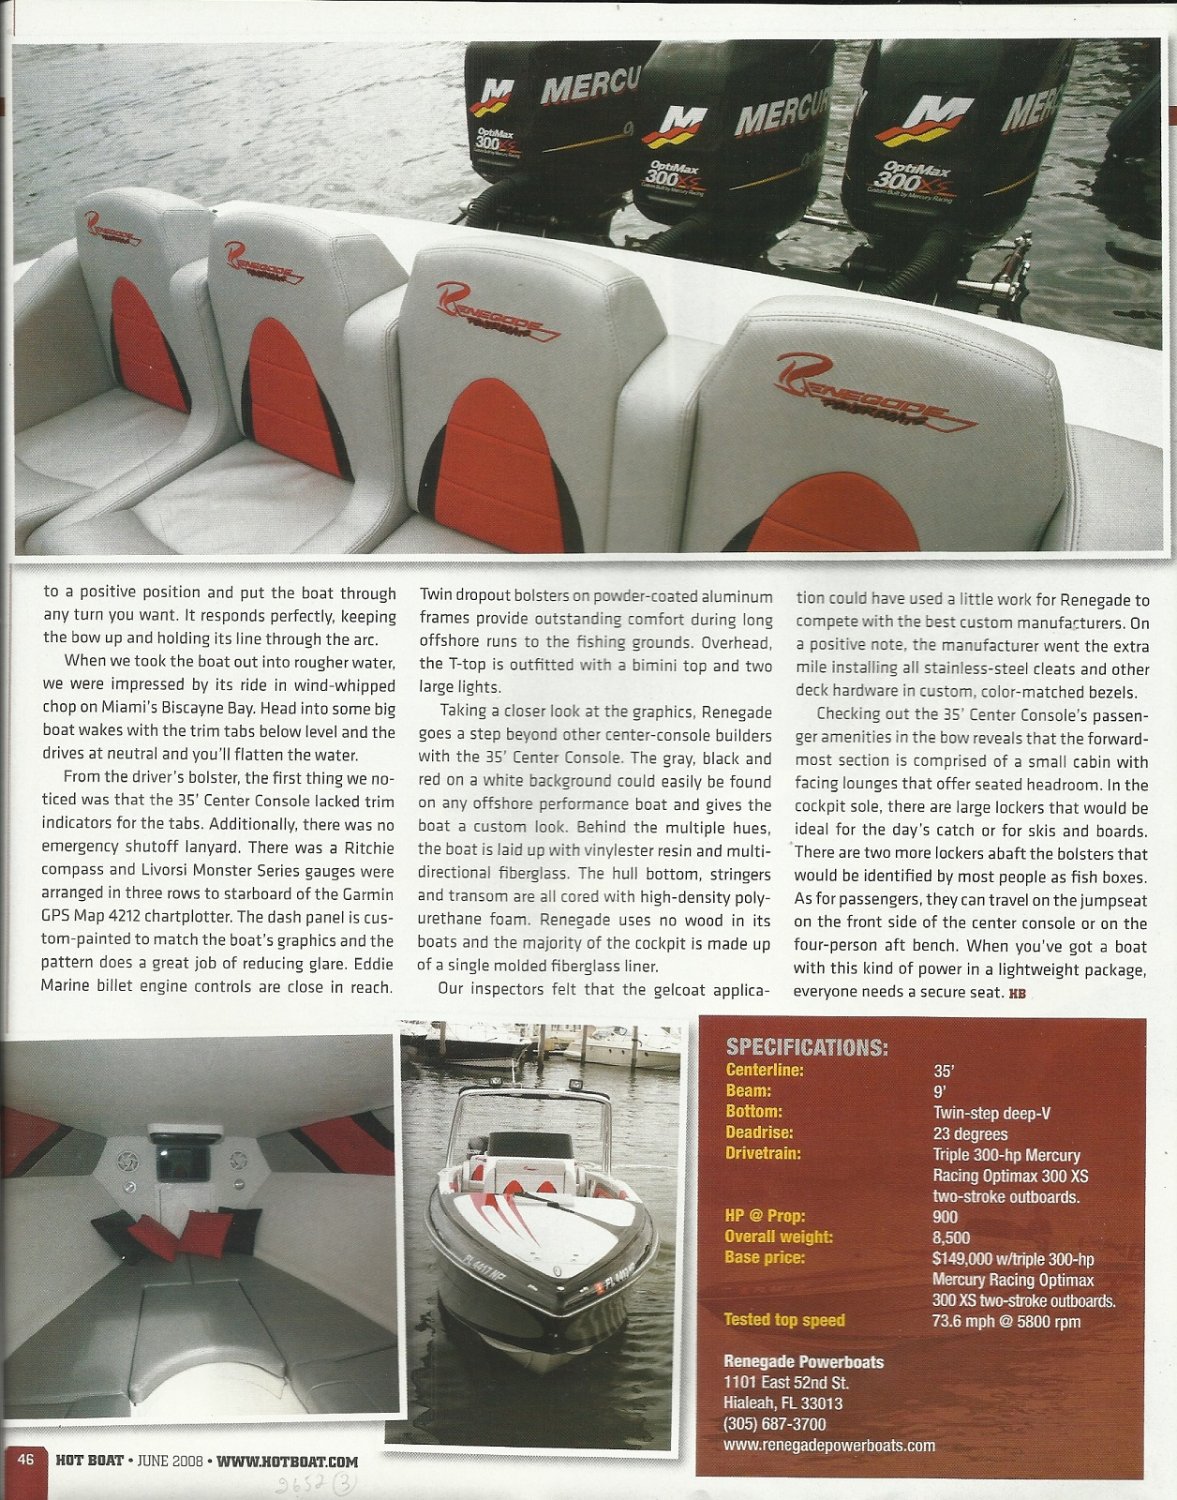 2008 Renegade Powerboats 35' Center Console Review & Specs- Photos